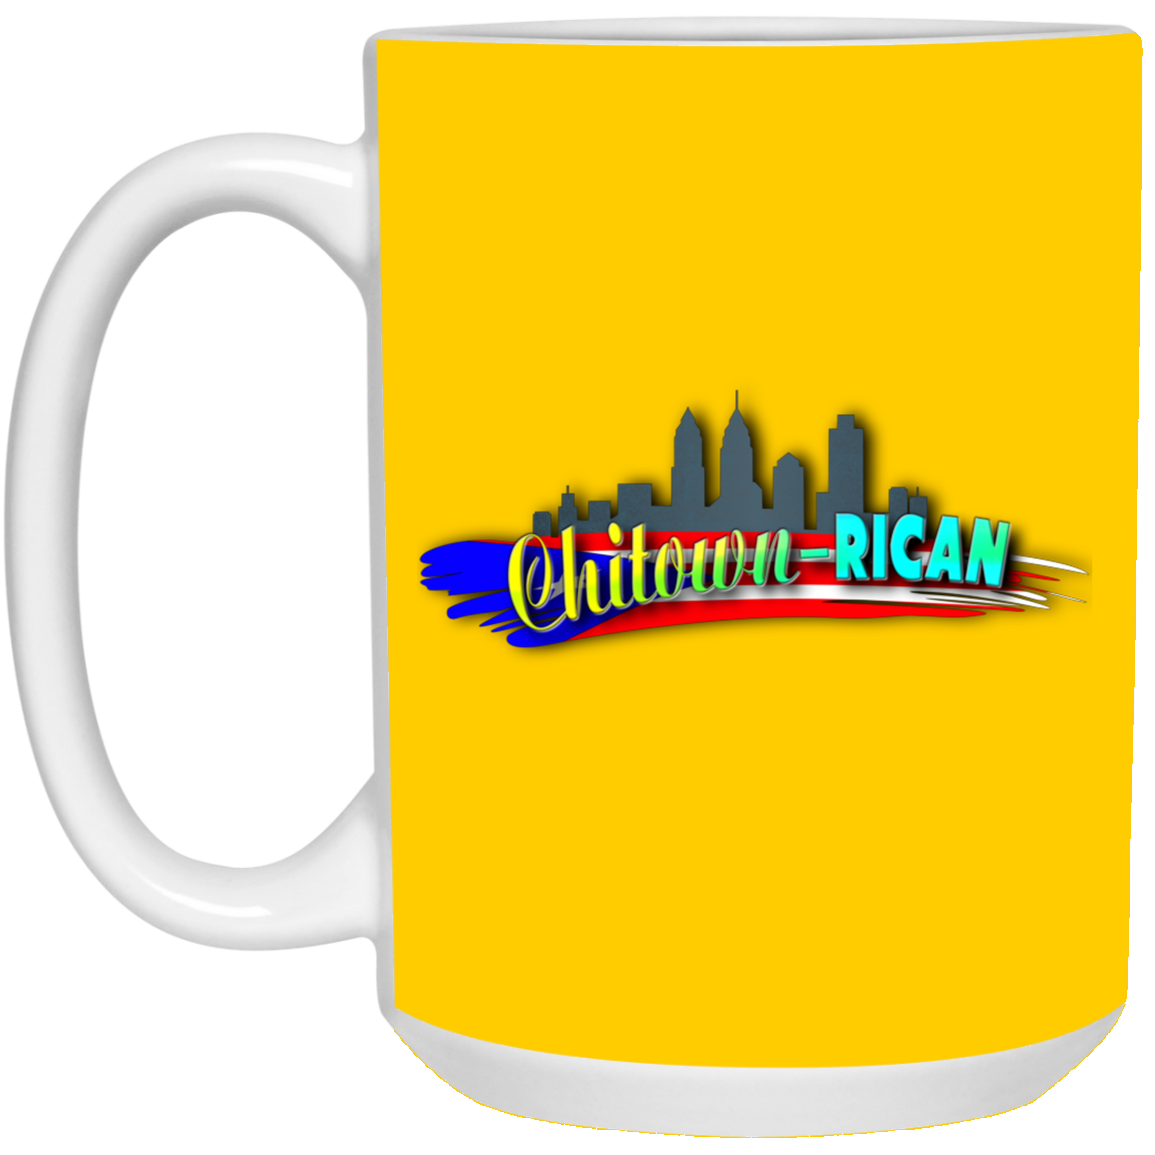 Chitown-Rican15 oz. White Mug - Puerto Rican Pride